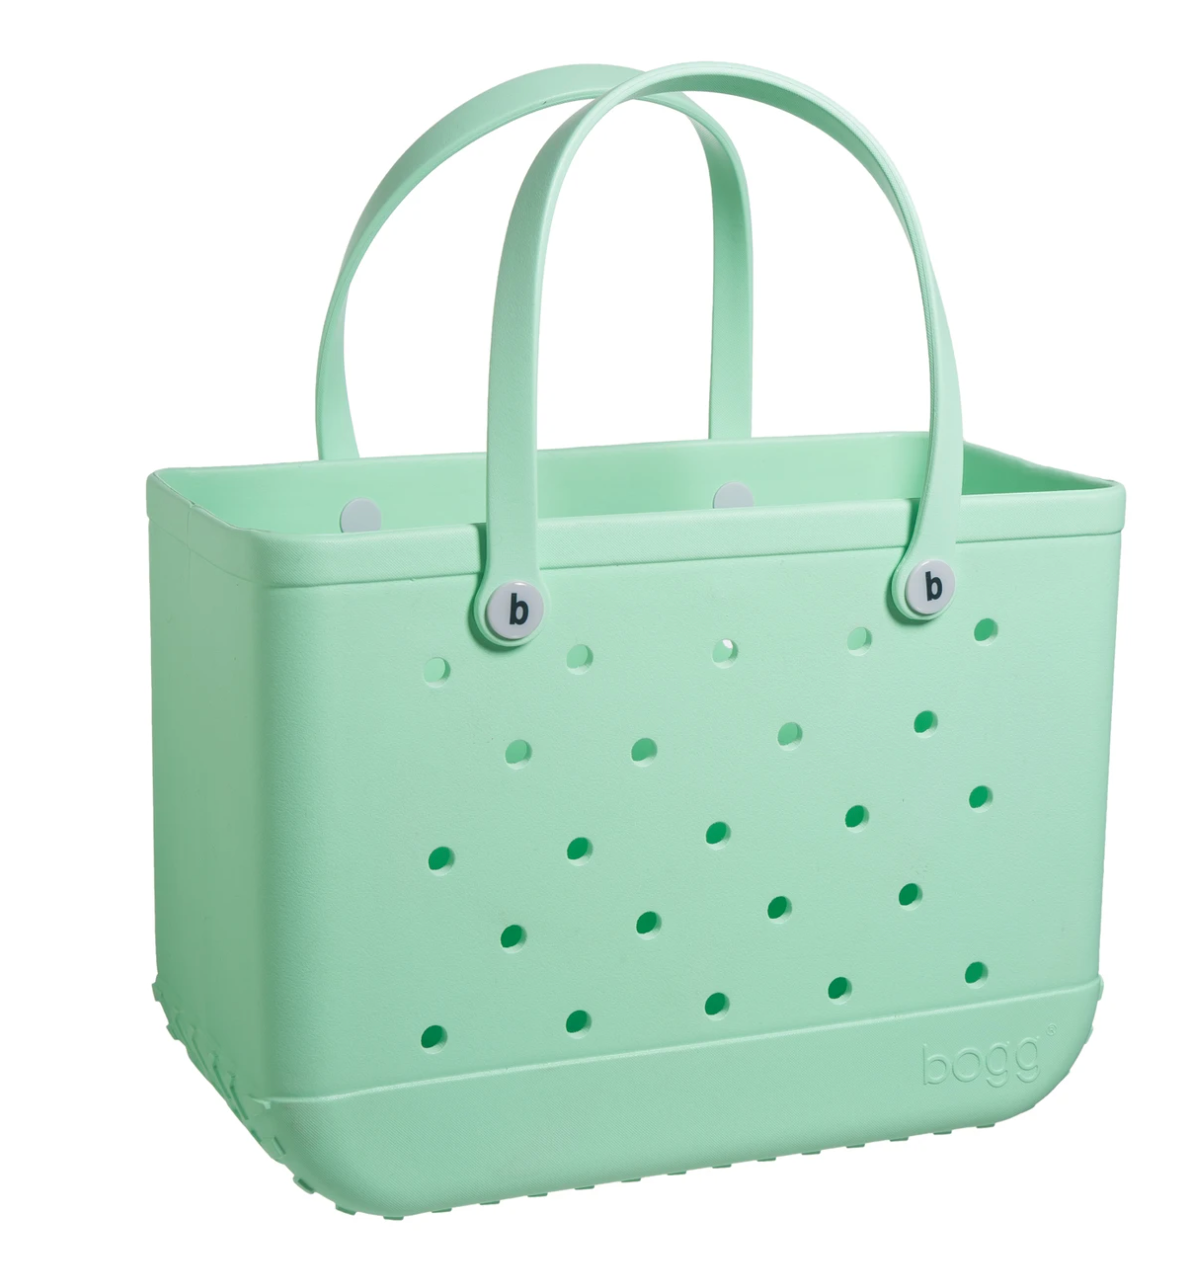 Bogg Bag Original Large Tote - Turquoise - reBlossom Mama & Baby Shop